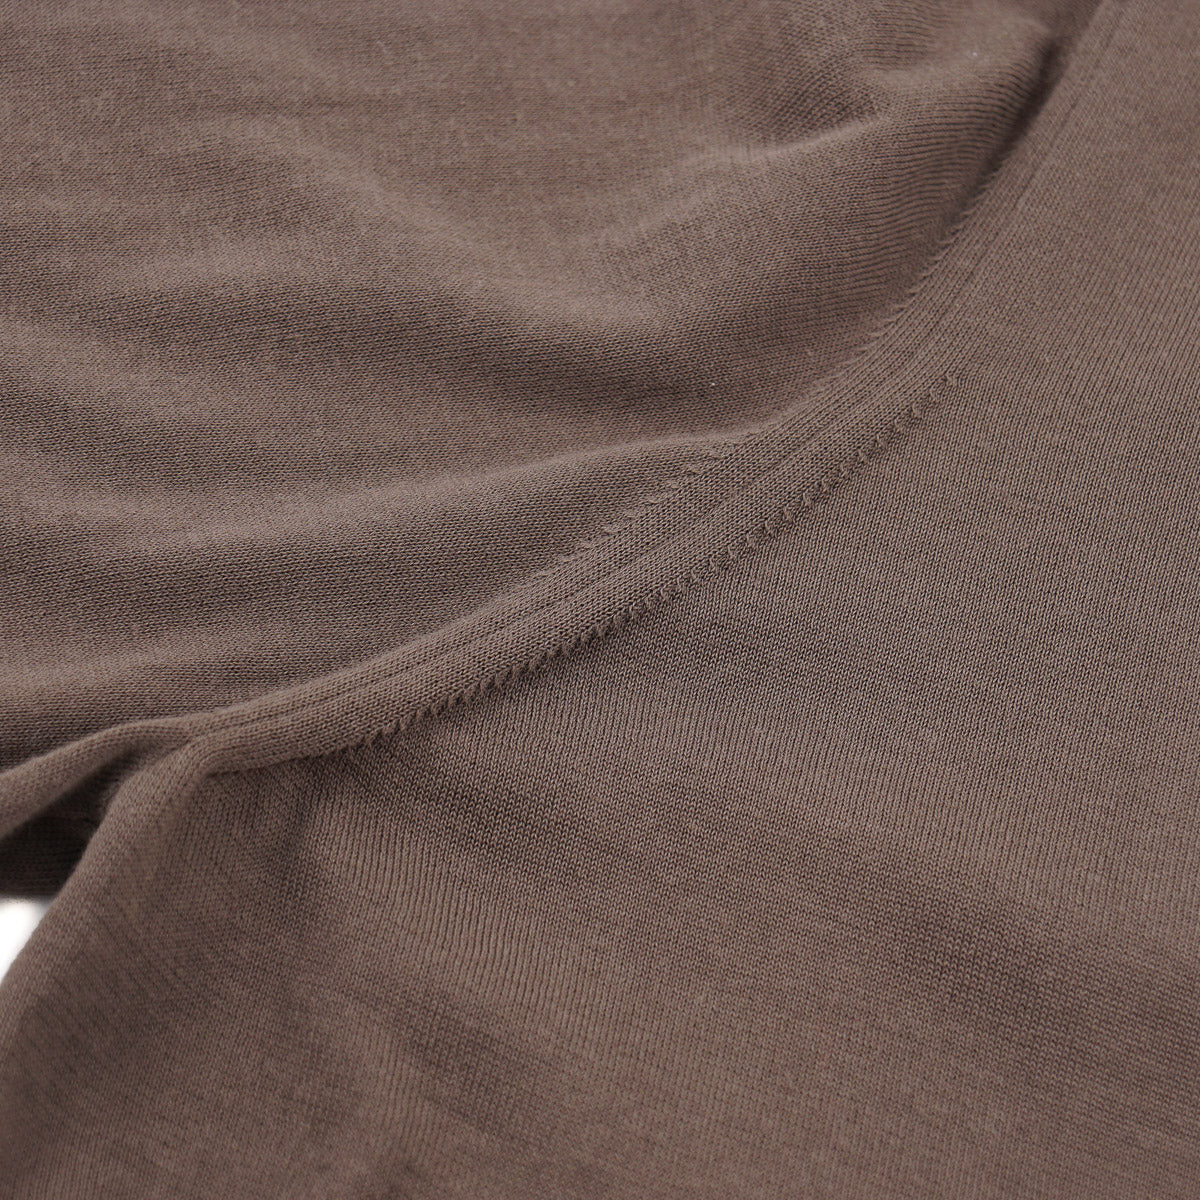 Drumohr Superfine Cotton Cardigan Sweater - Top Shelf Apparel